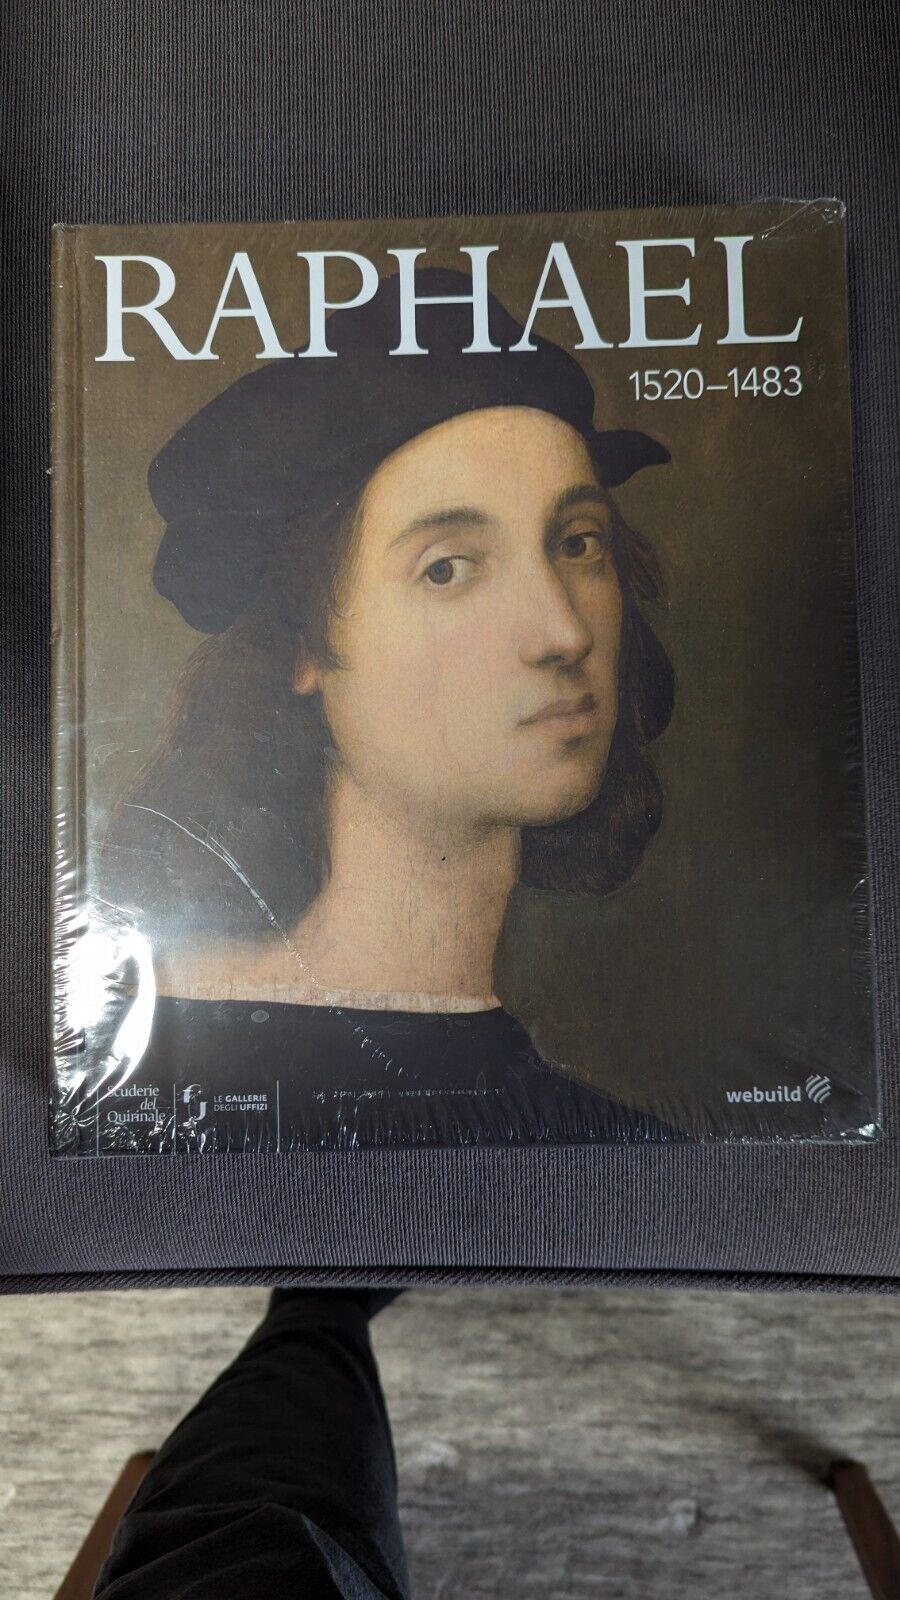 Raphael: 1520-1483 by Marzia Faietti (English) Hardcover Book, New